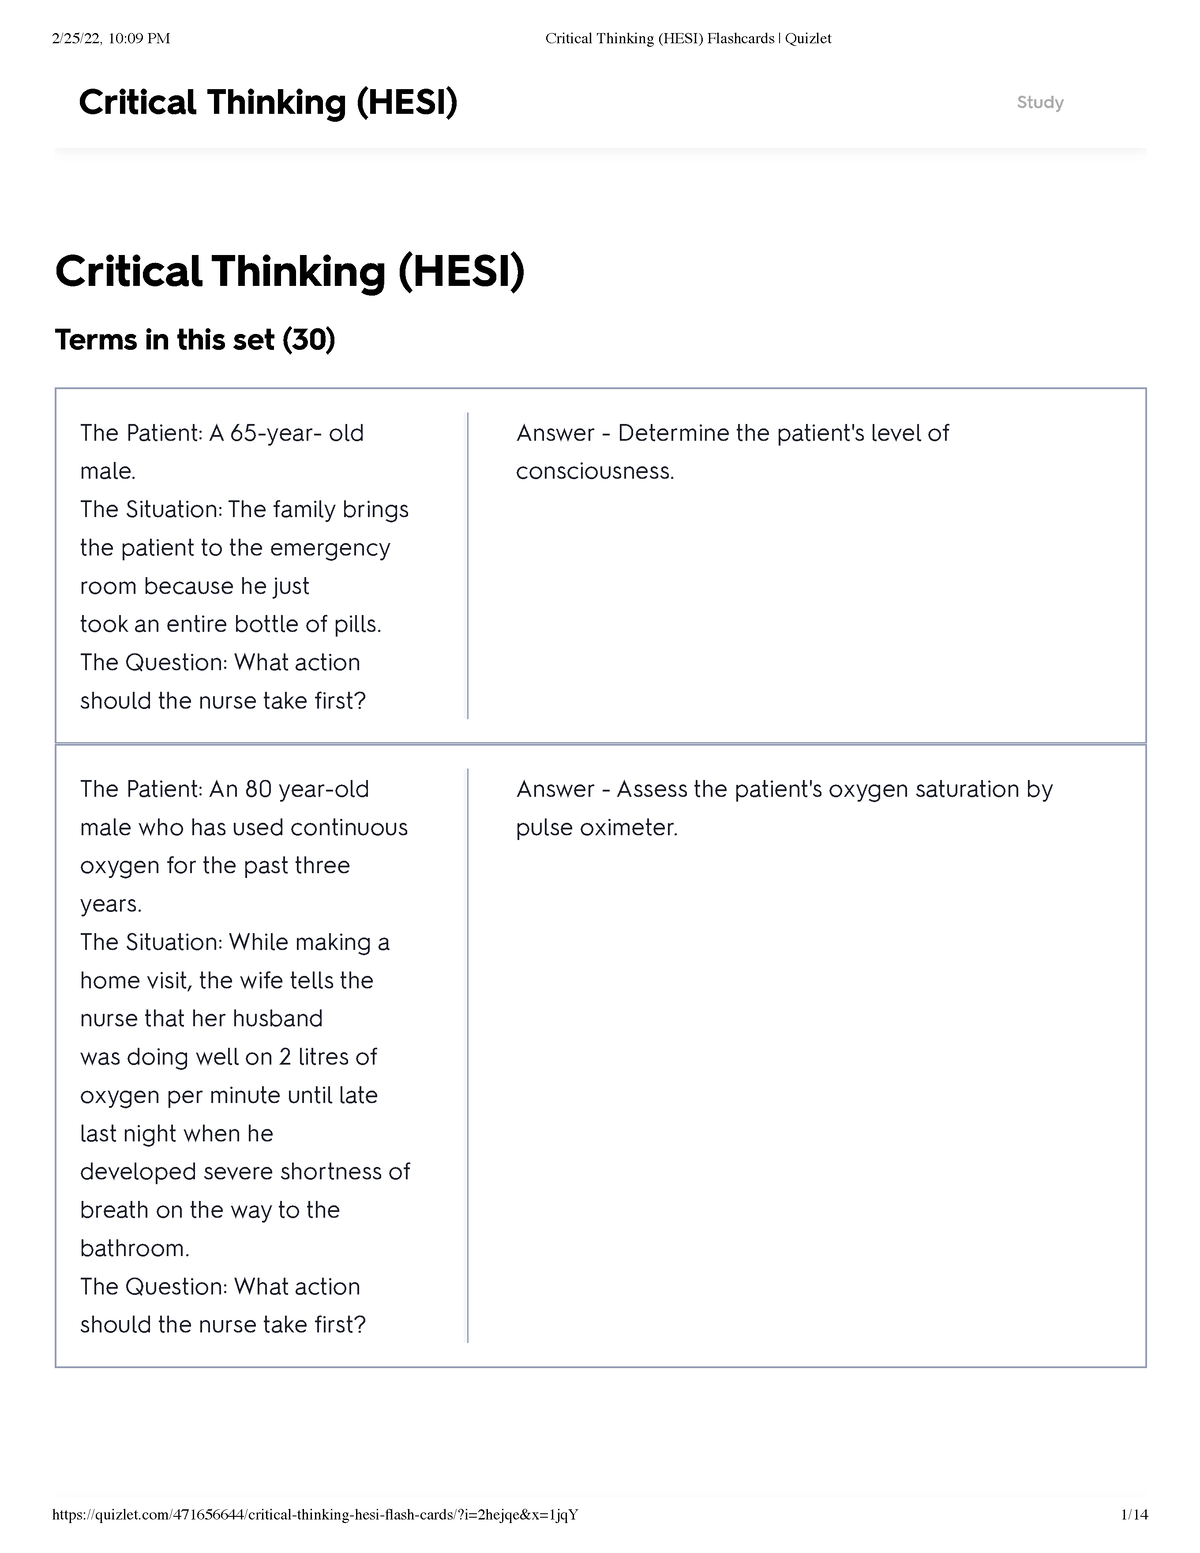 hesi critical thinking quizlet 2020